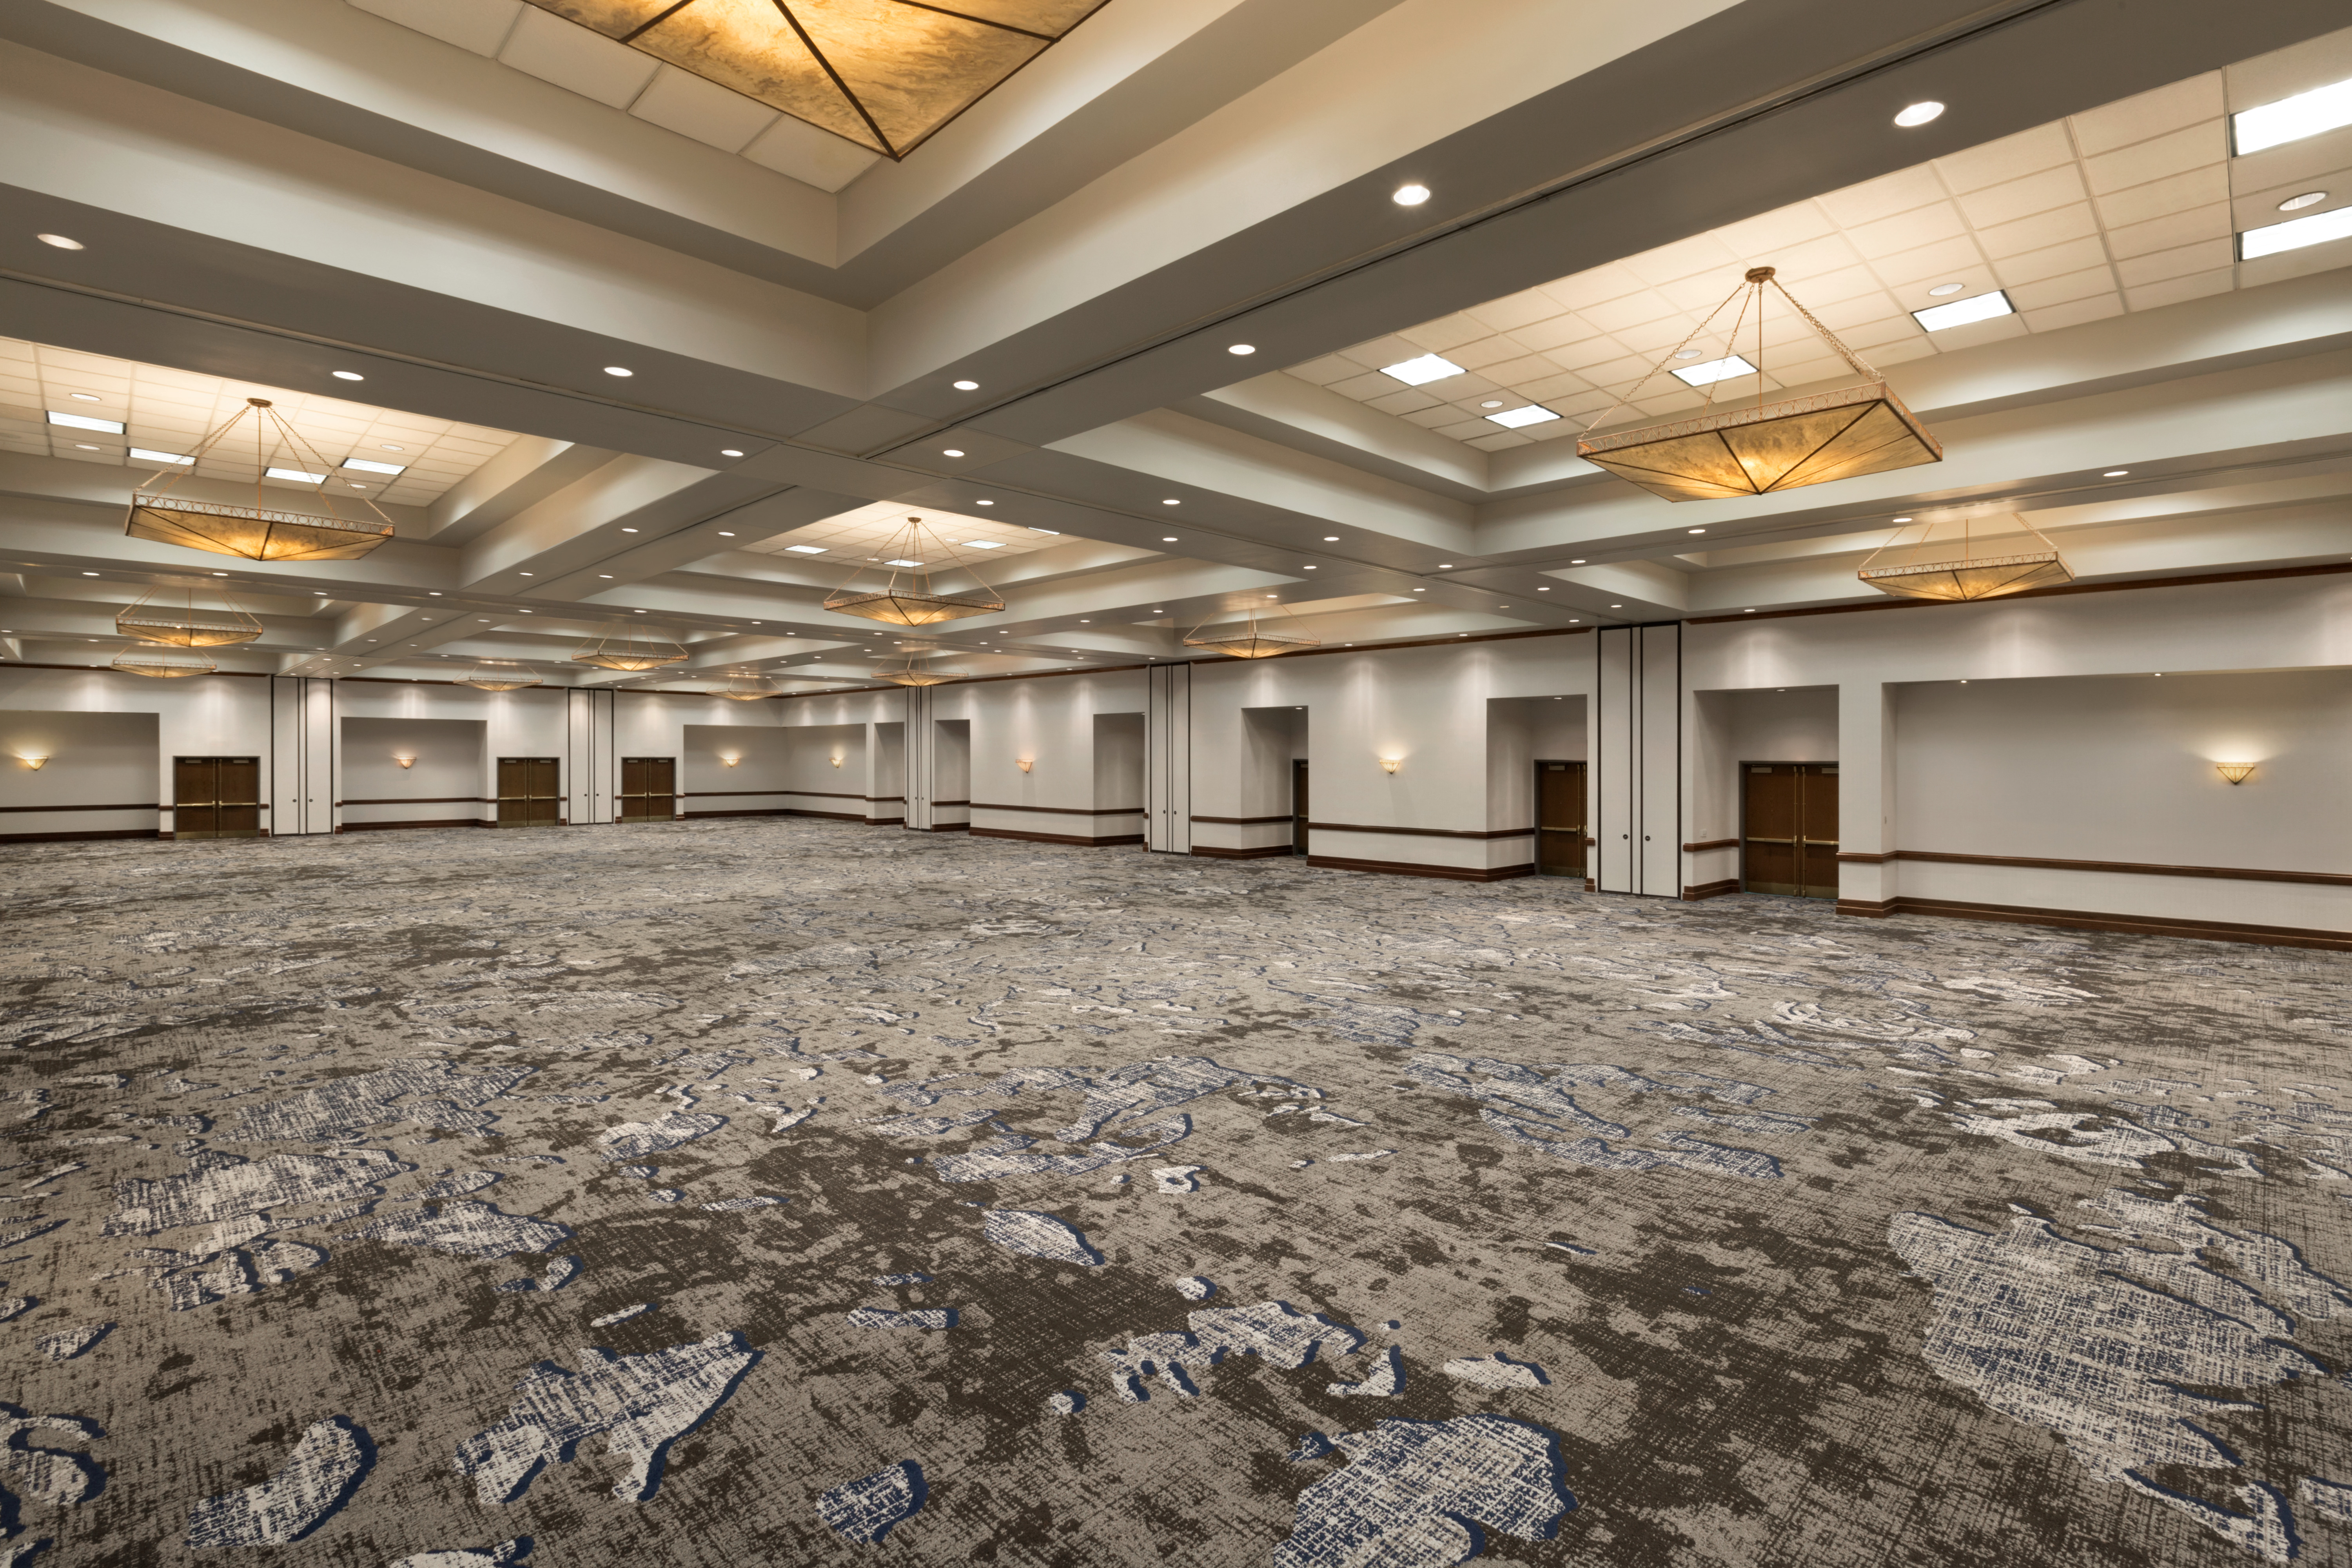 Embassy Suites Dallas - DFW Airport North Outdoor World Hotel, TX - Heritage Ballroom Empty